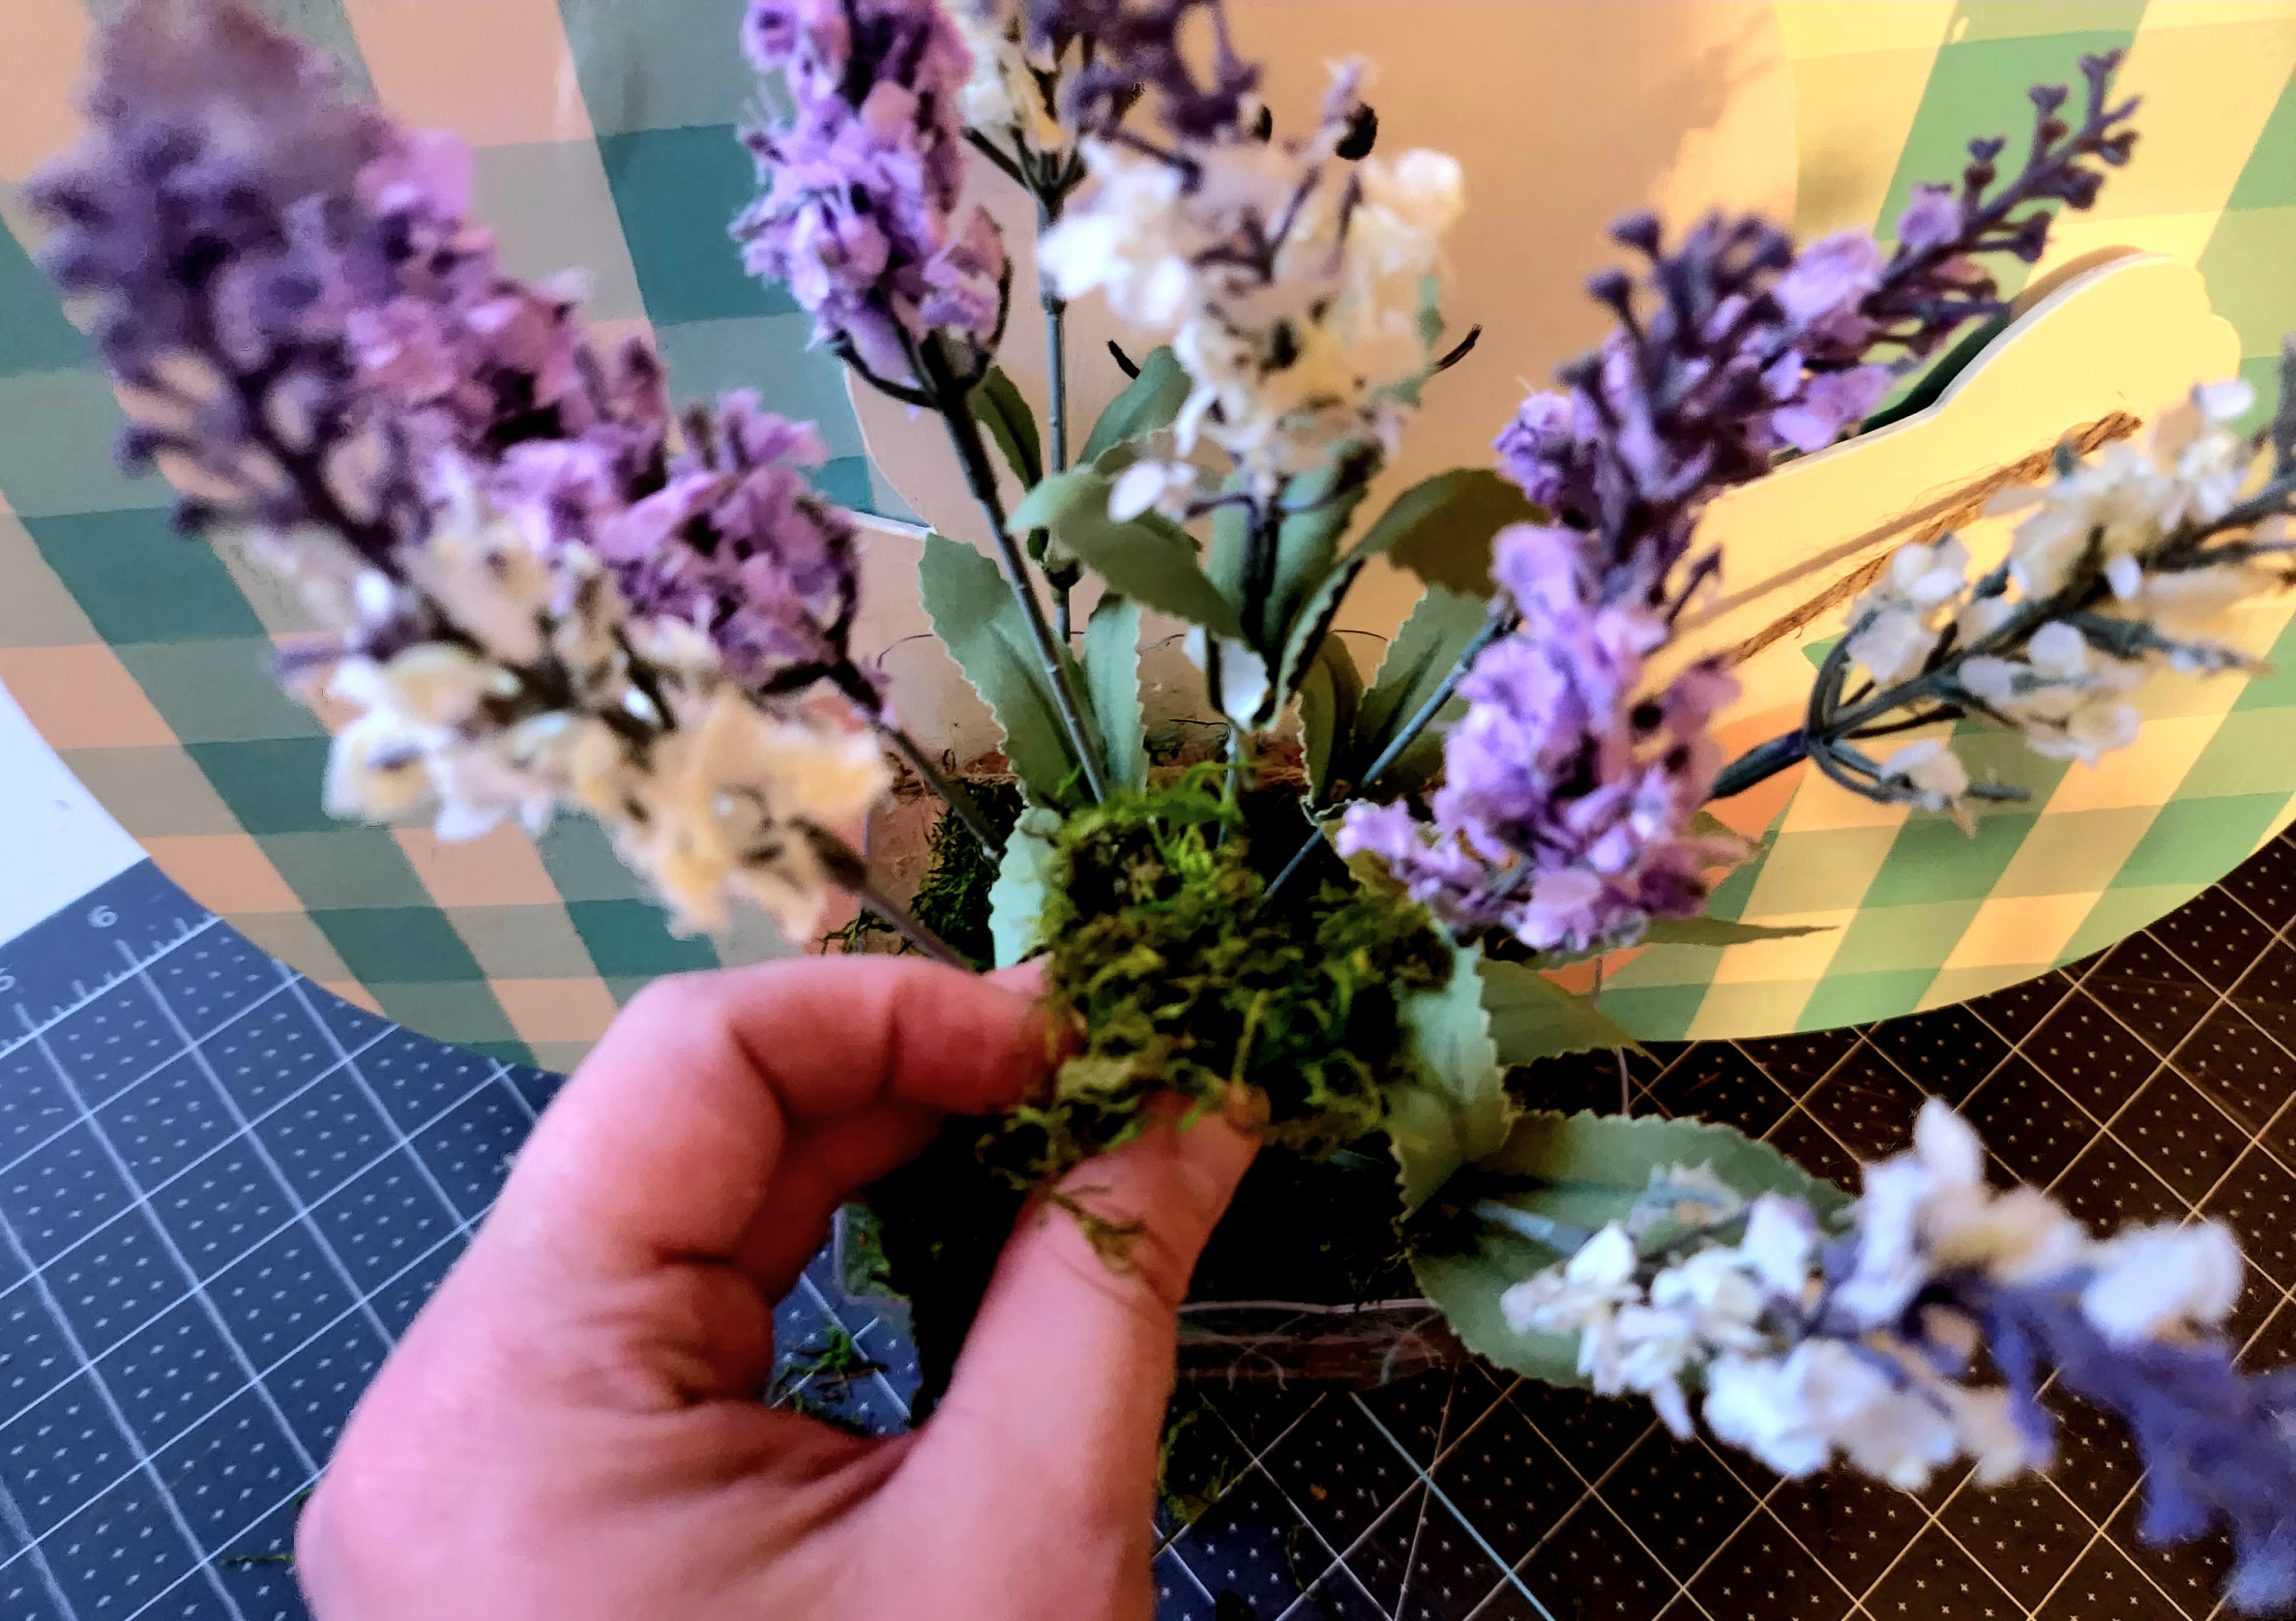 Placing lavender in the vase on the Easter door hanger.